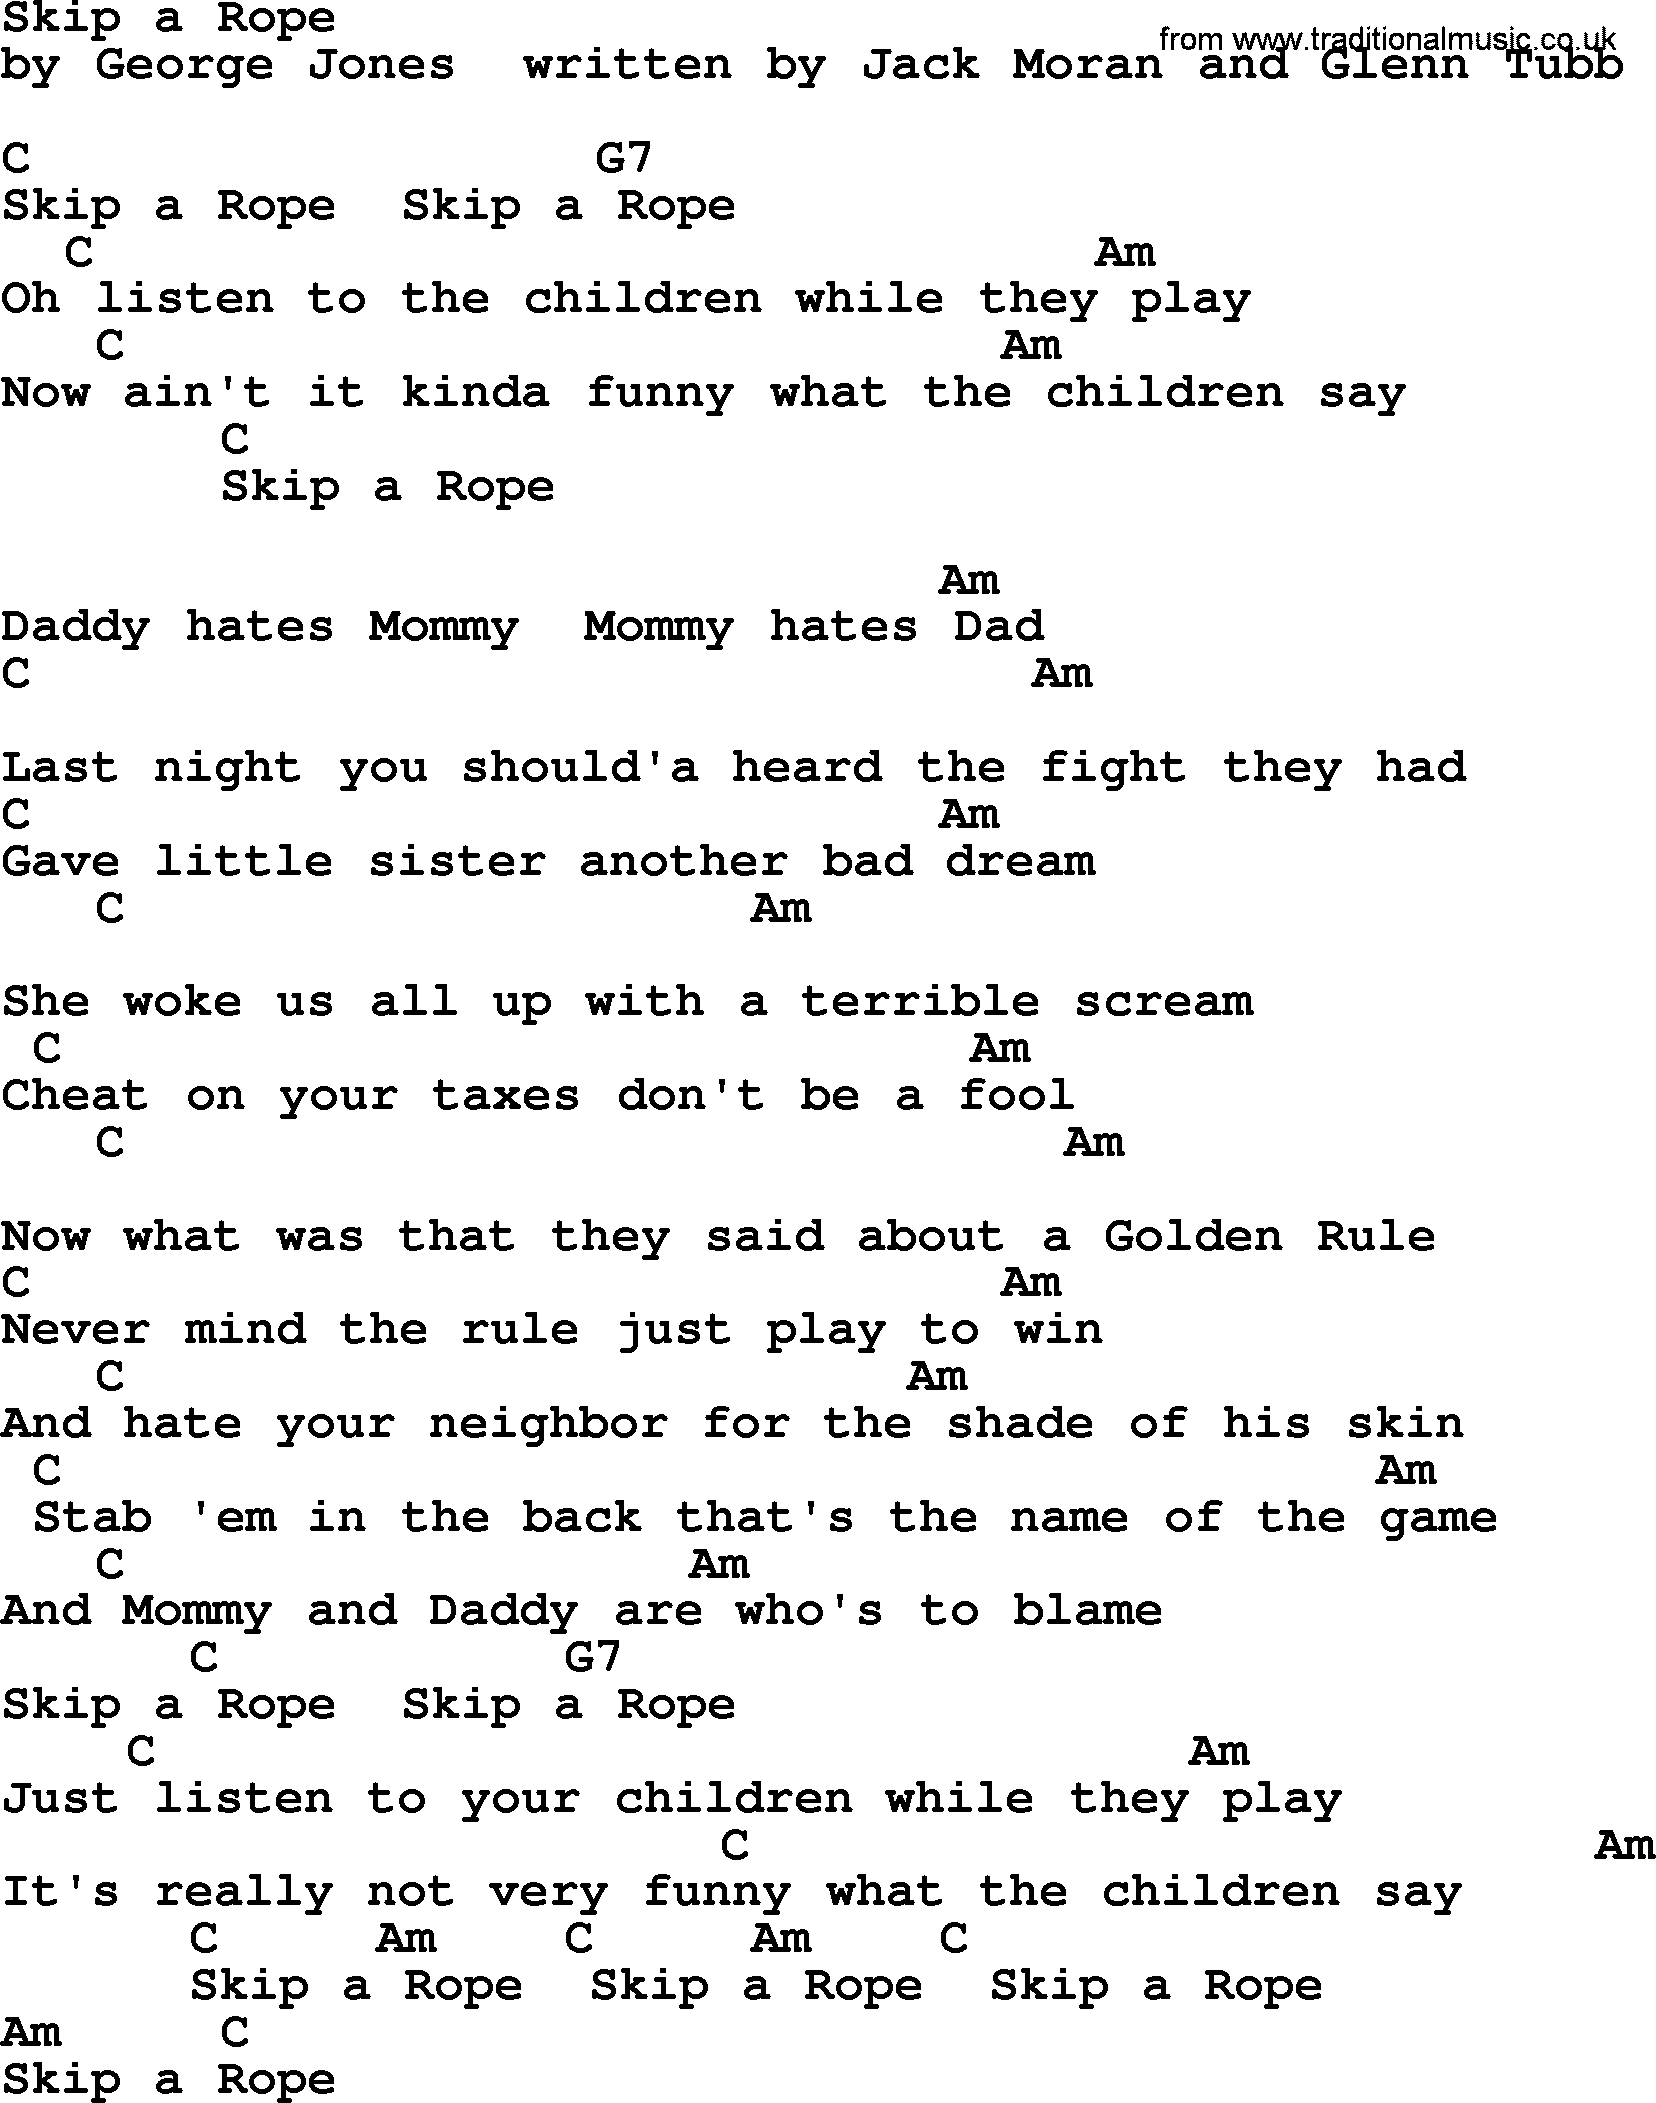 George Jones song: Skip A Rope, lyrics and chords